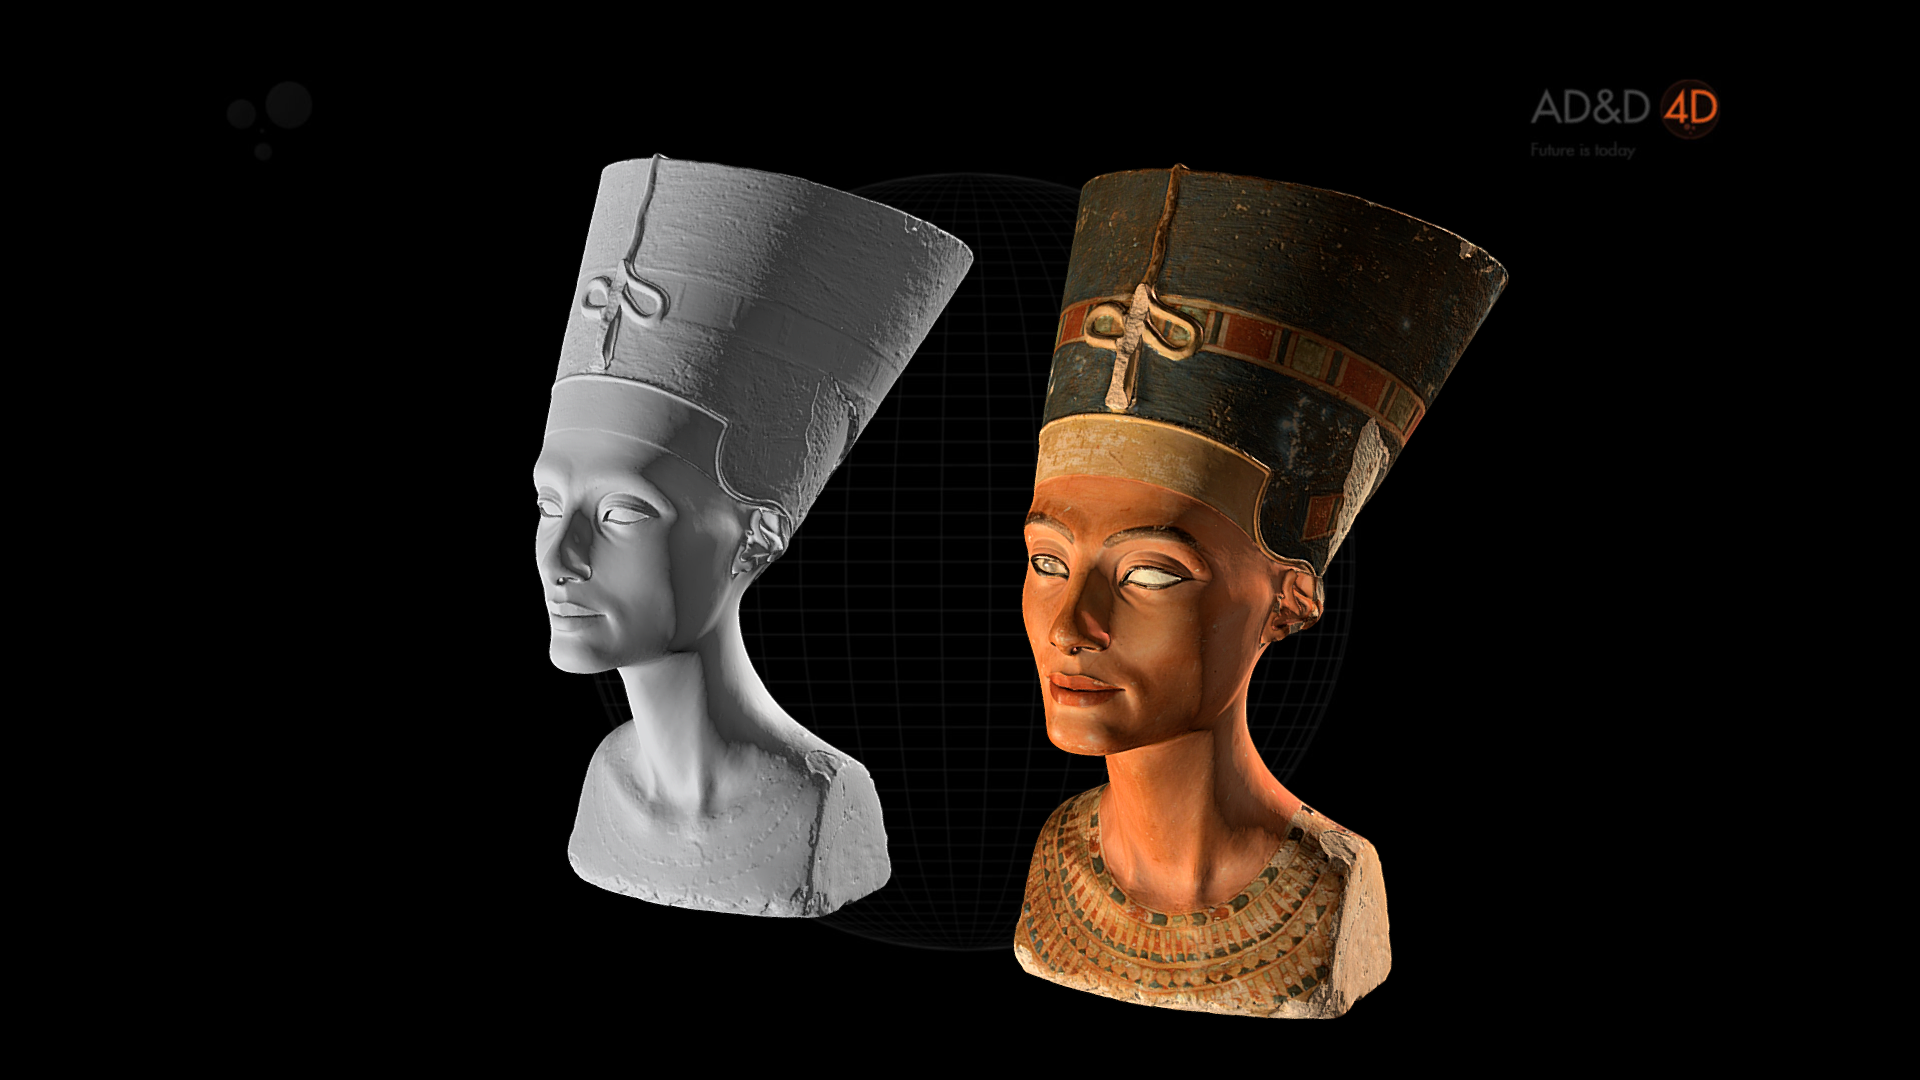 Unlit version of the Nefertiti bust